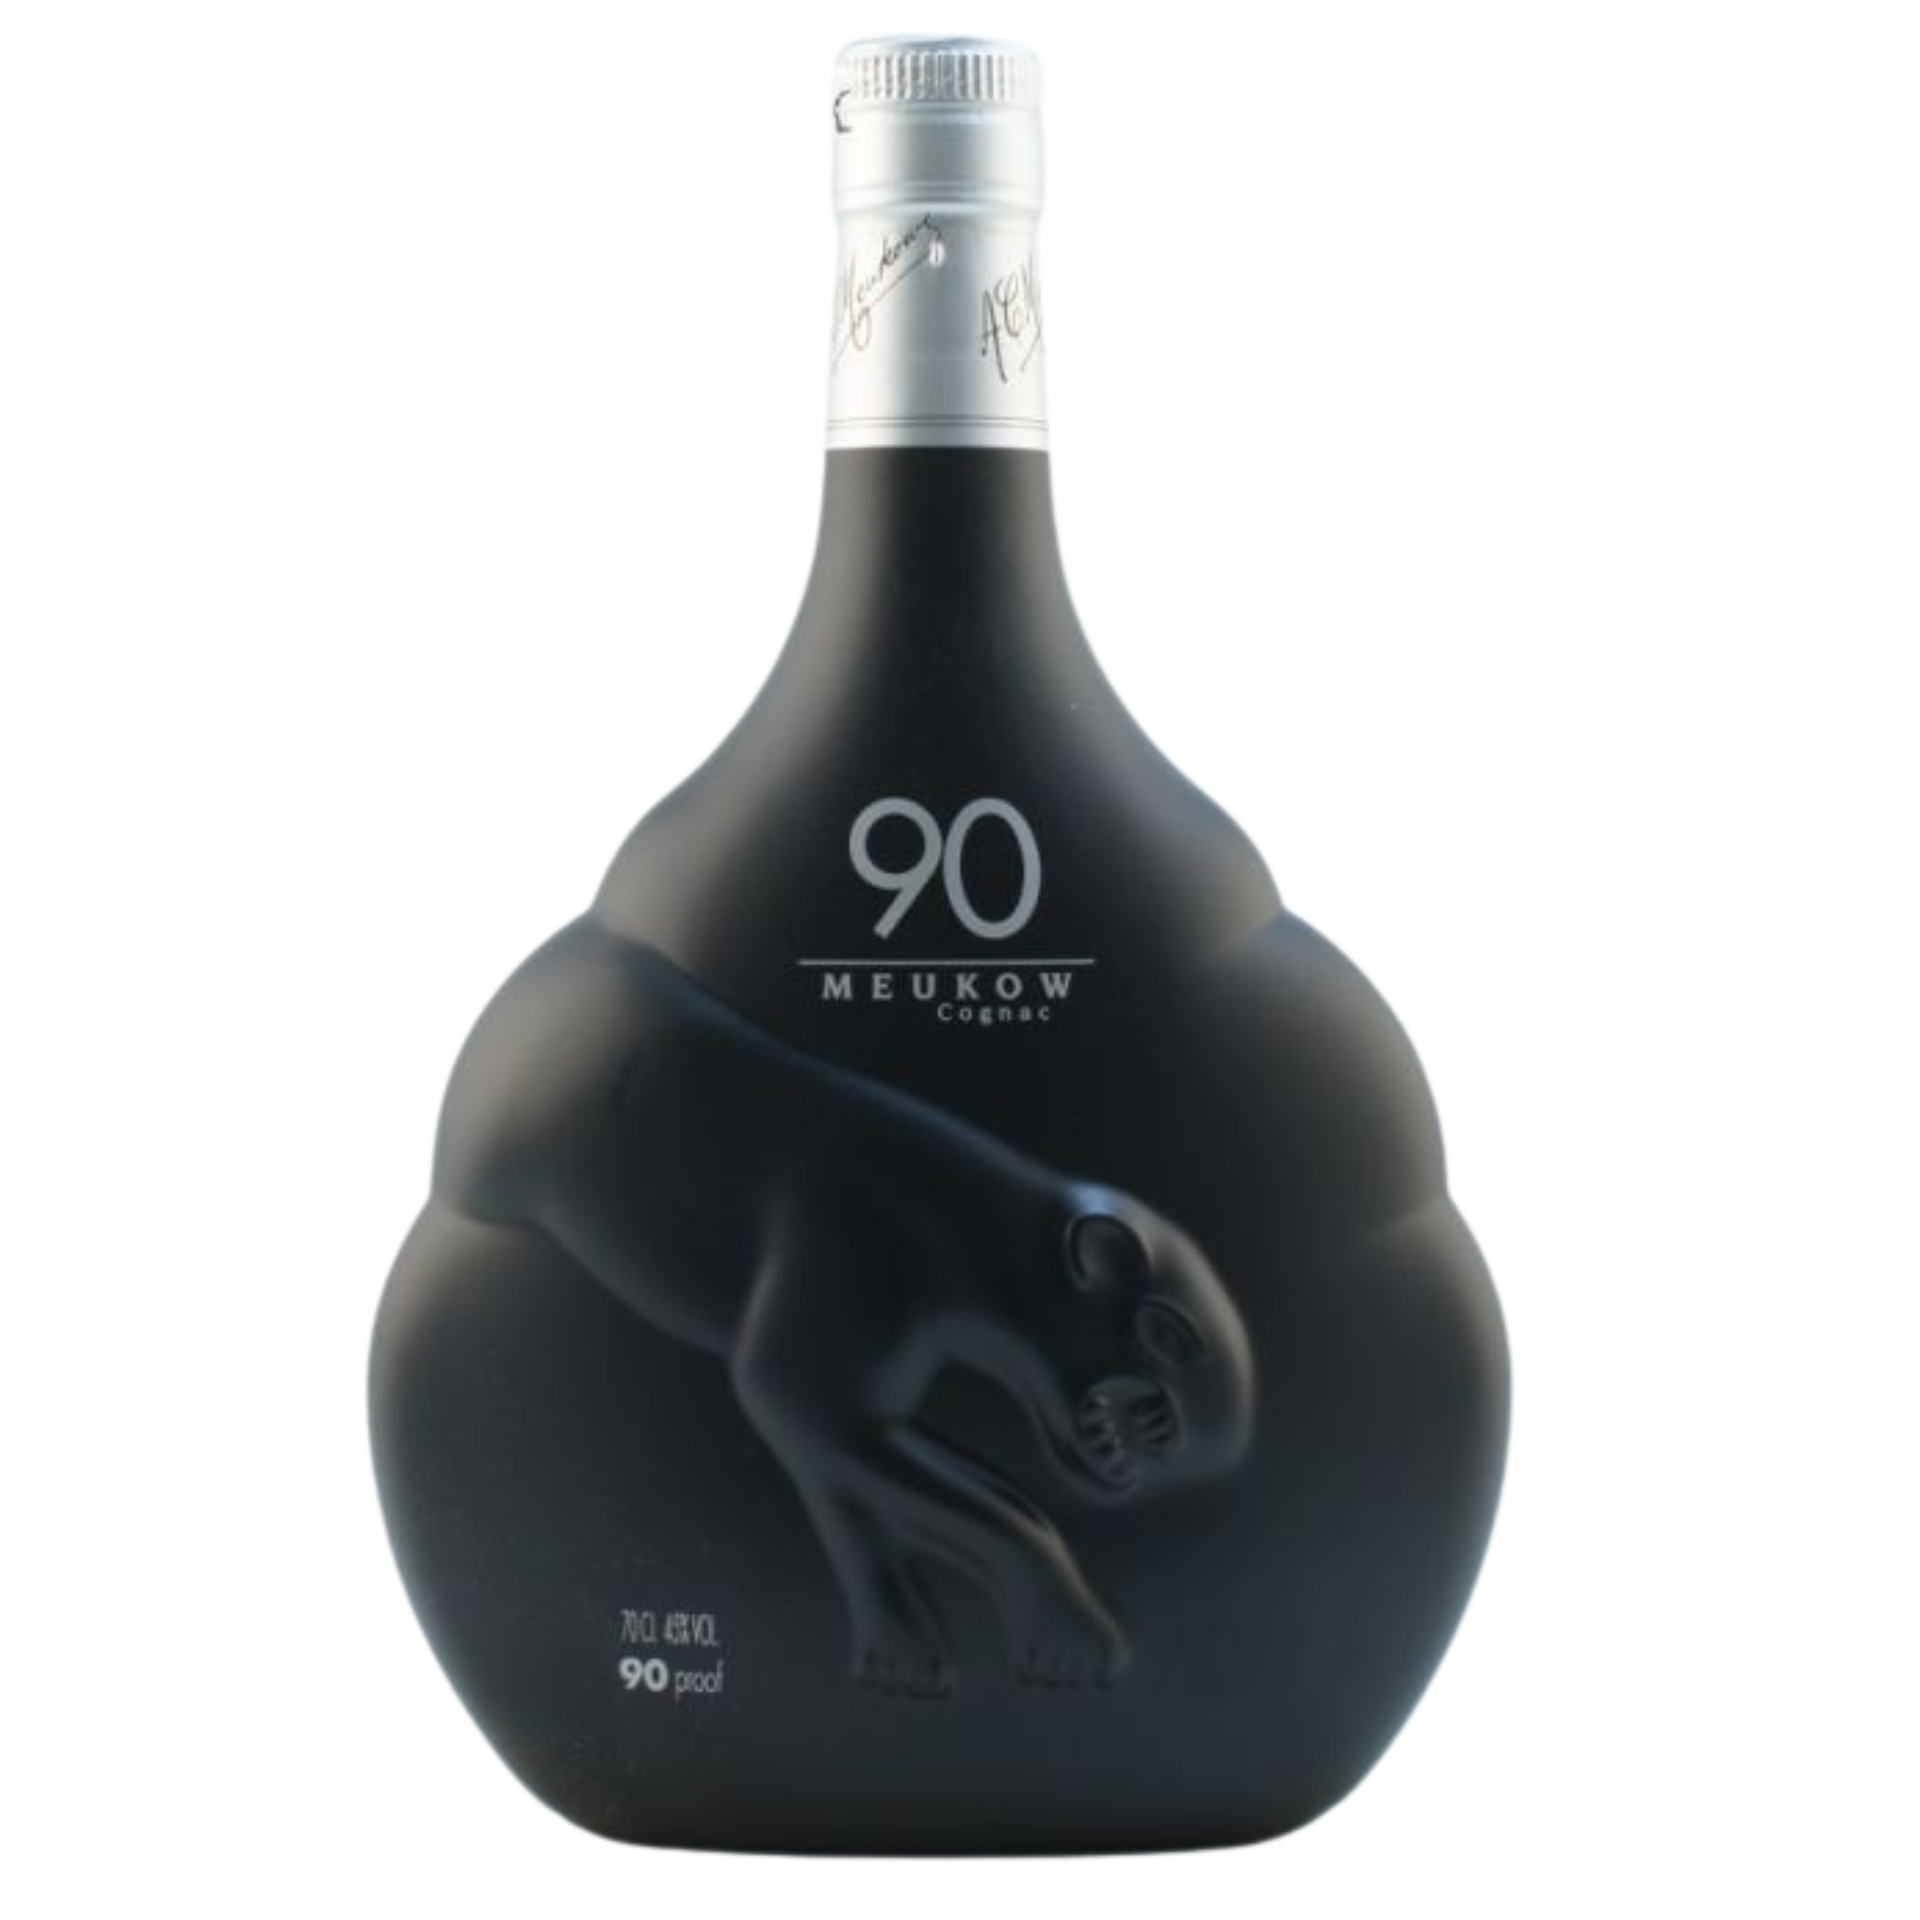 Meukow 90 Proof Cognac 45% 0,7l